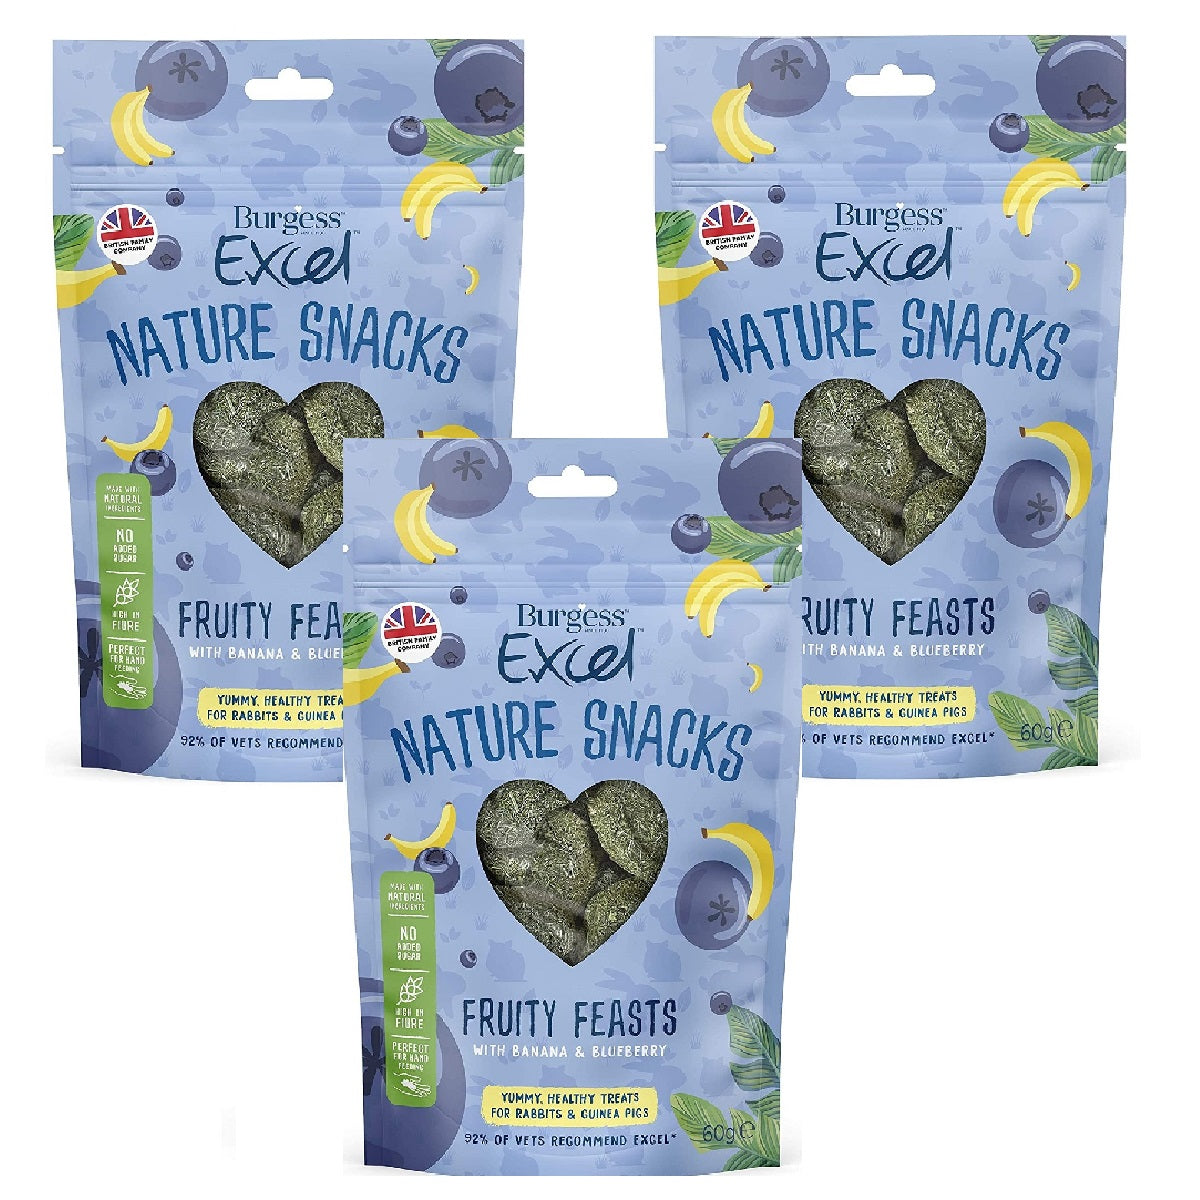 Burgess - Excel Nature Snacks